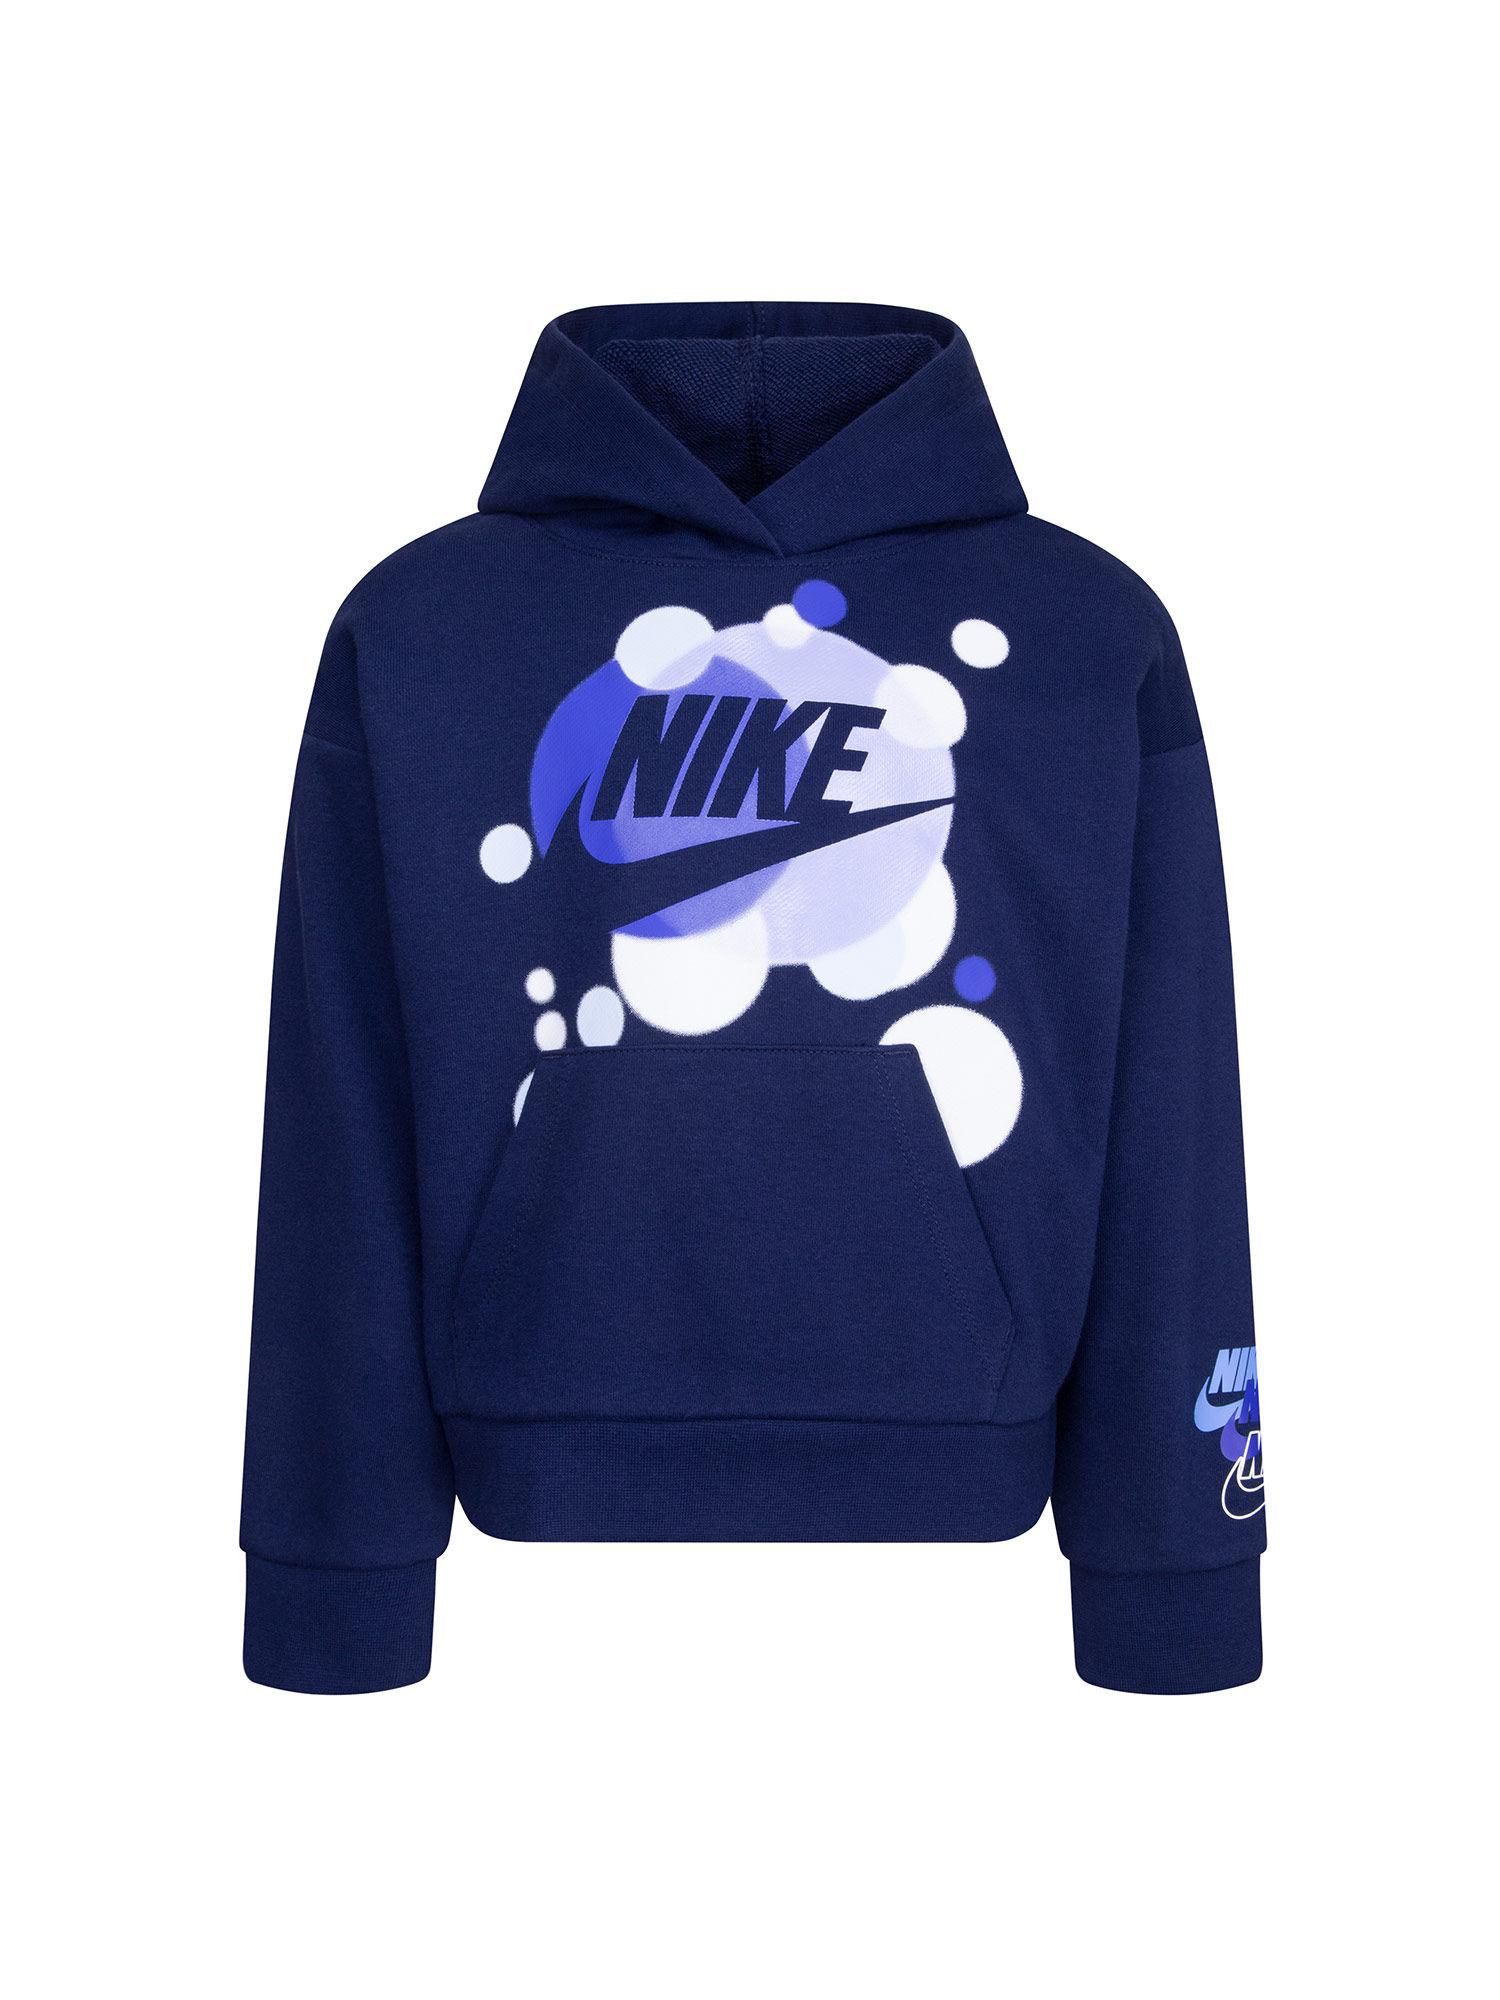 girls navy blue graphic hoodie